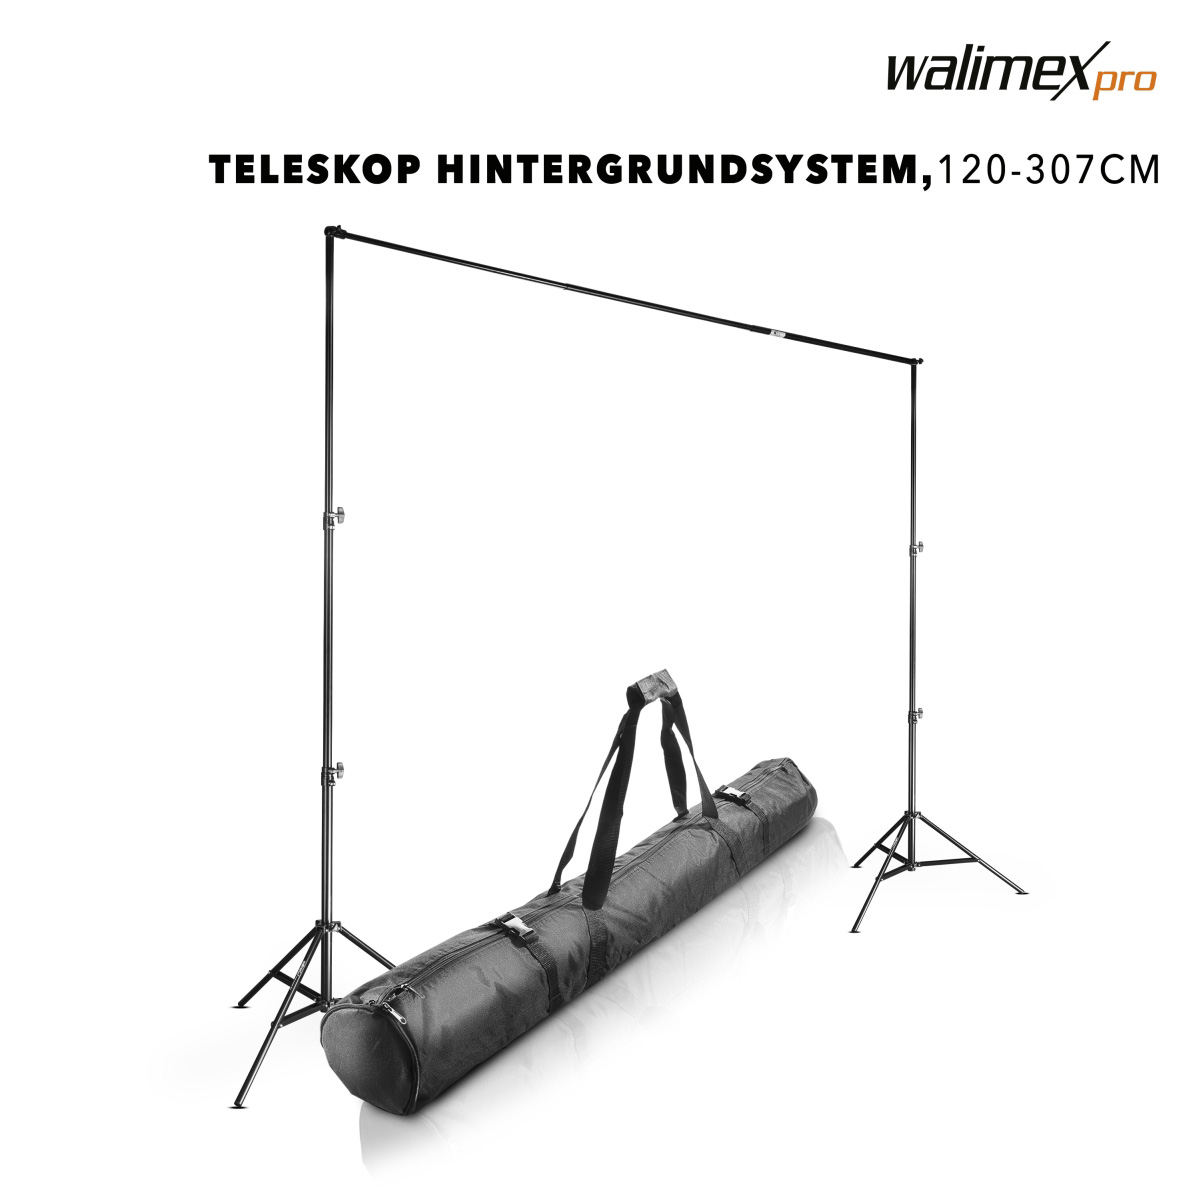 Walimex pro Teleskop Hintergrundsystem 120-307 cm